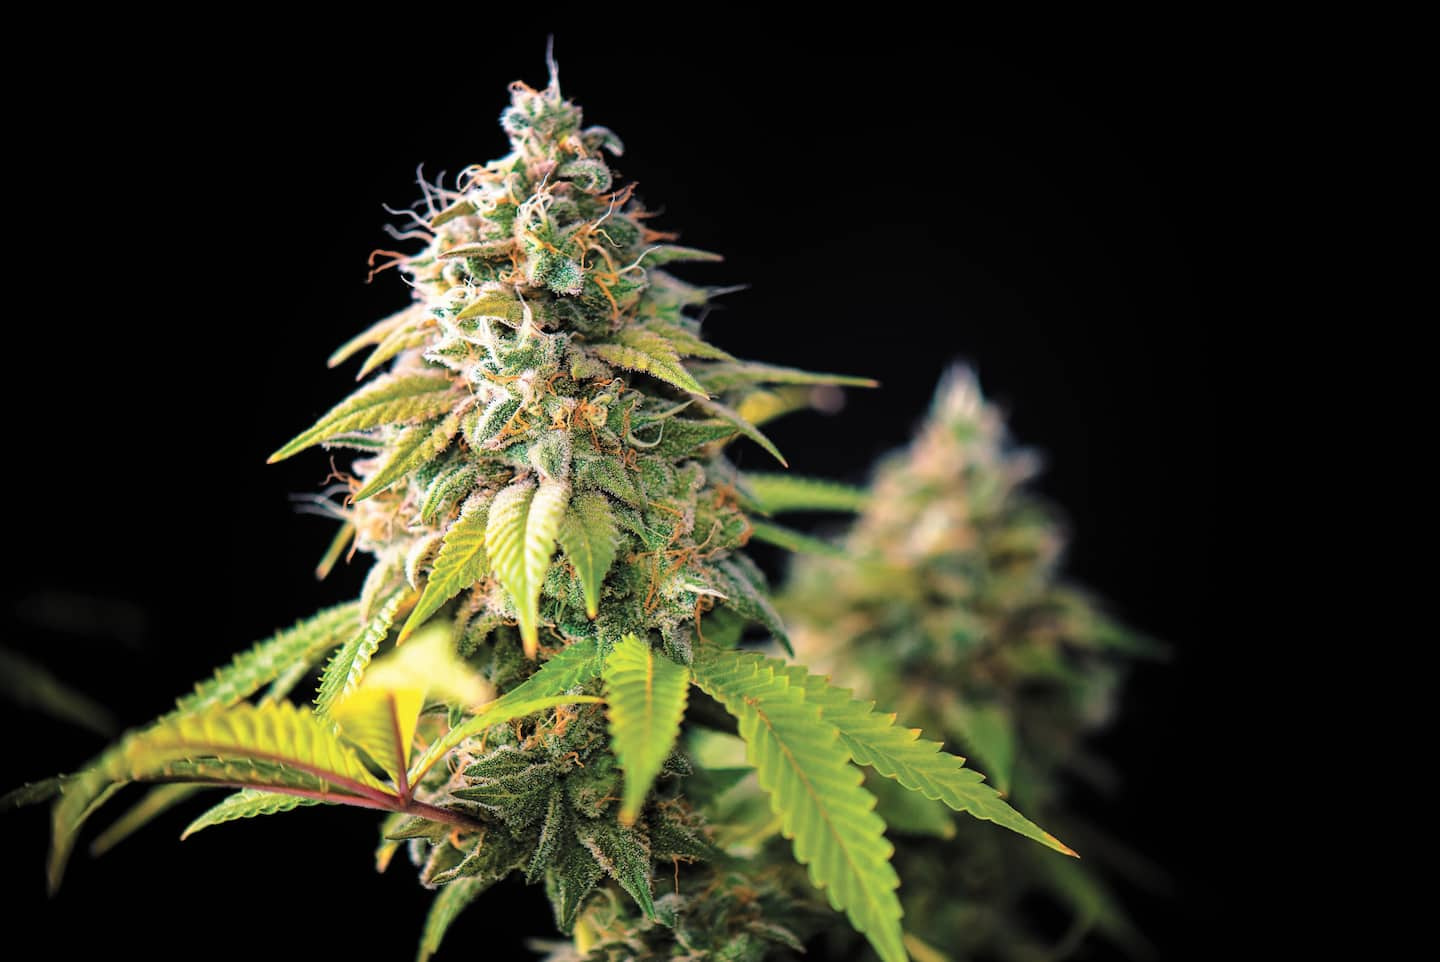 Cannabis-containing edibles: A claimed analysis